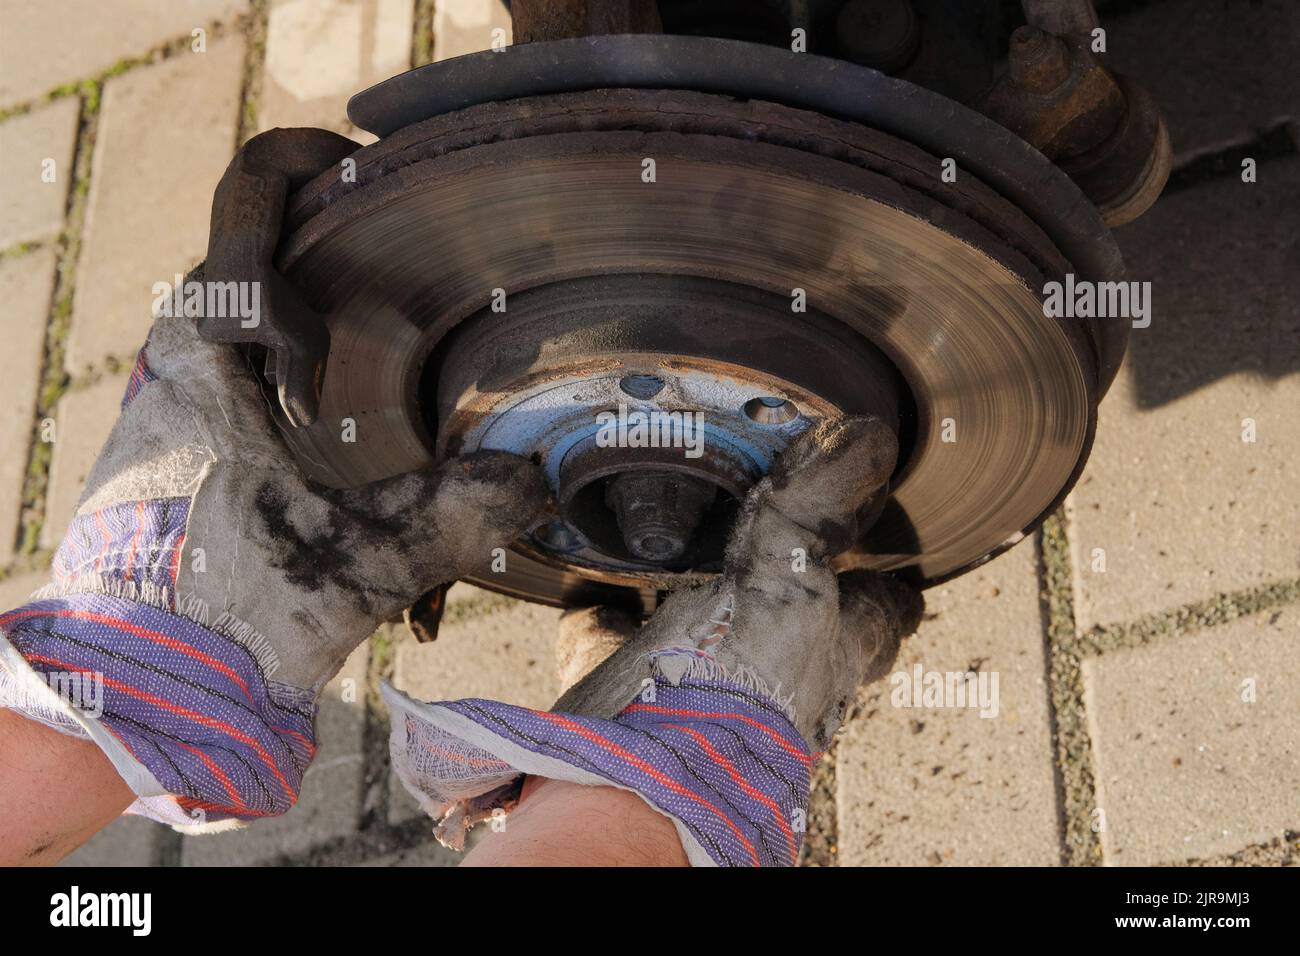 Check brake system of car. Car repair concept. Repair of a wheel on a passenger car. Stock Photo